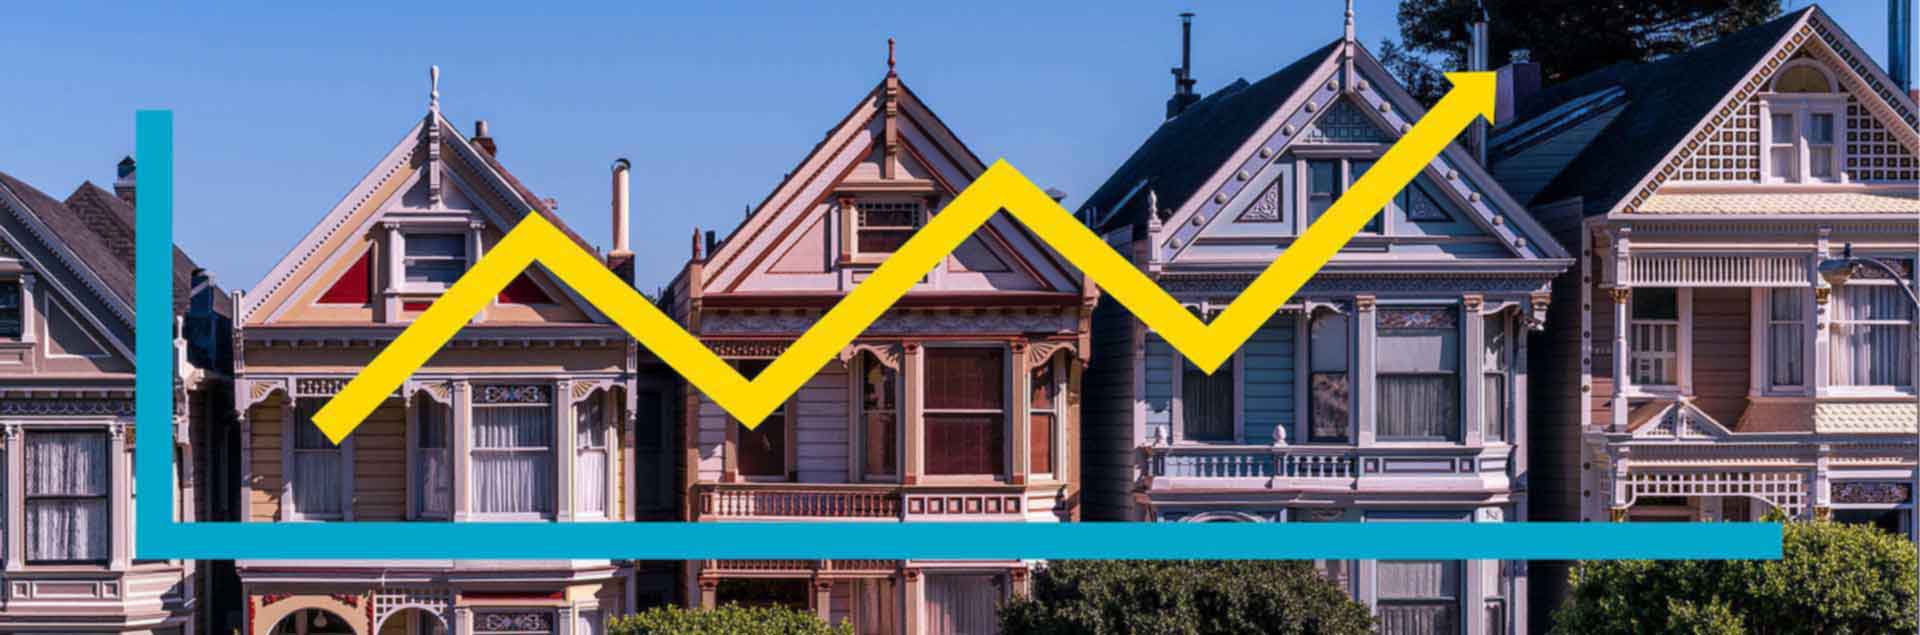 TransUnion landlord survey about the rental housing market